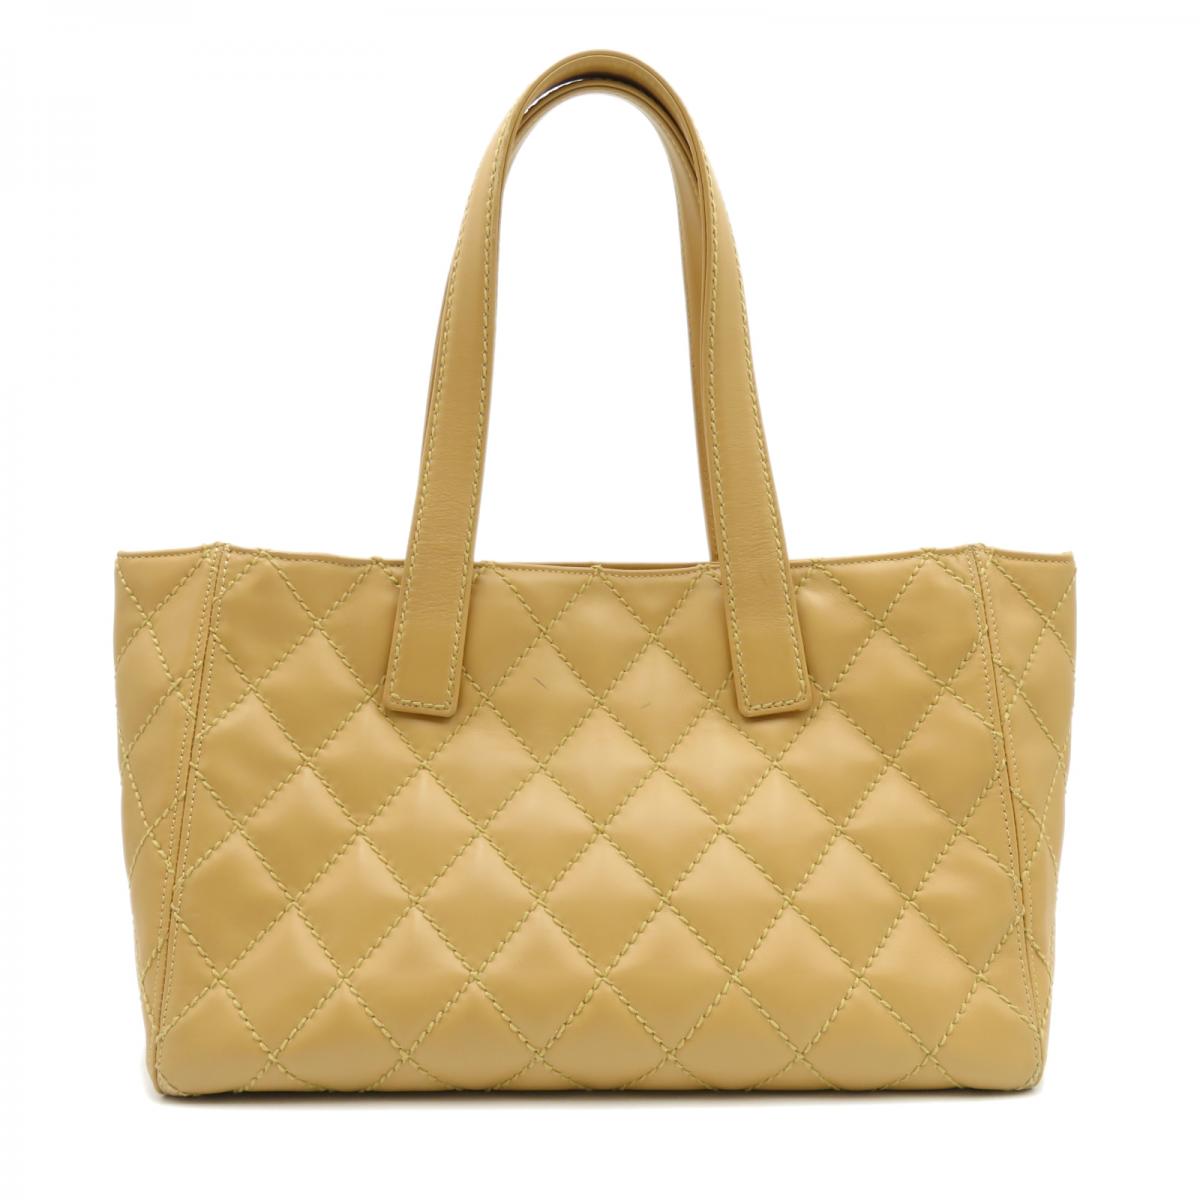 Surpique Leather Handbag 0.0